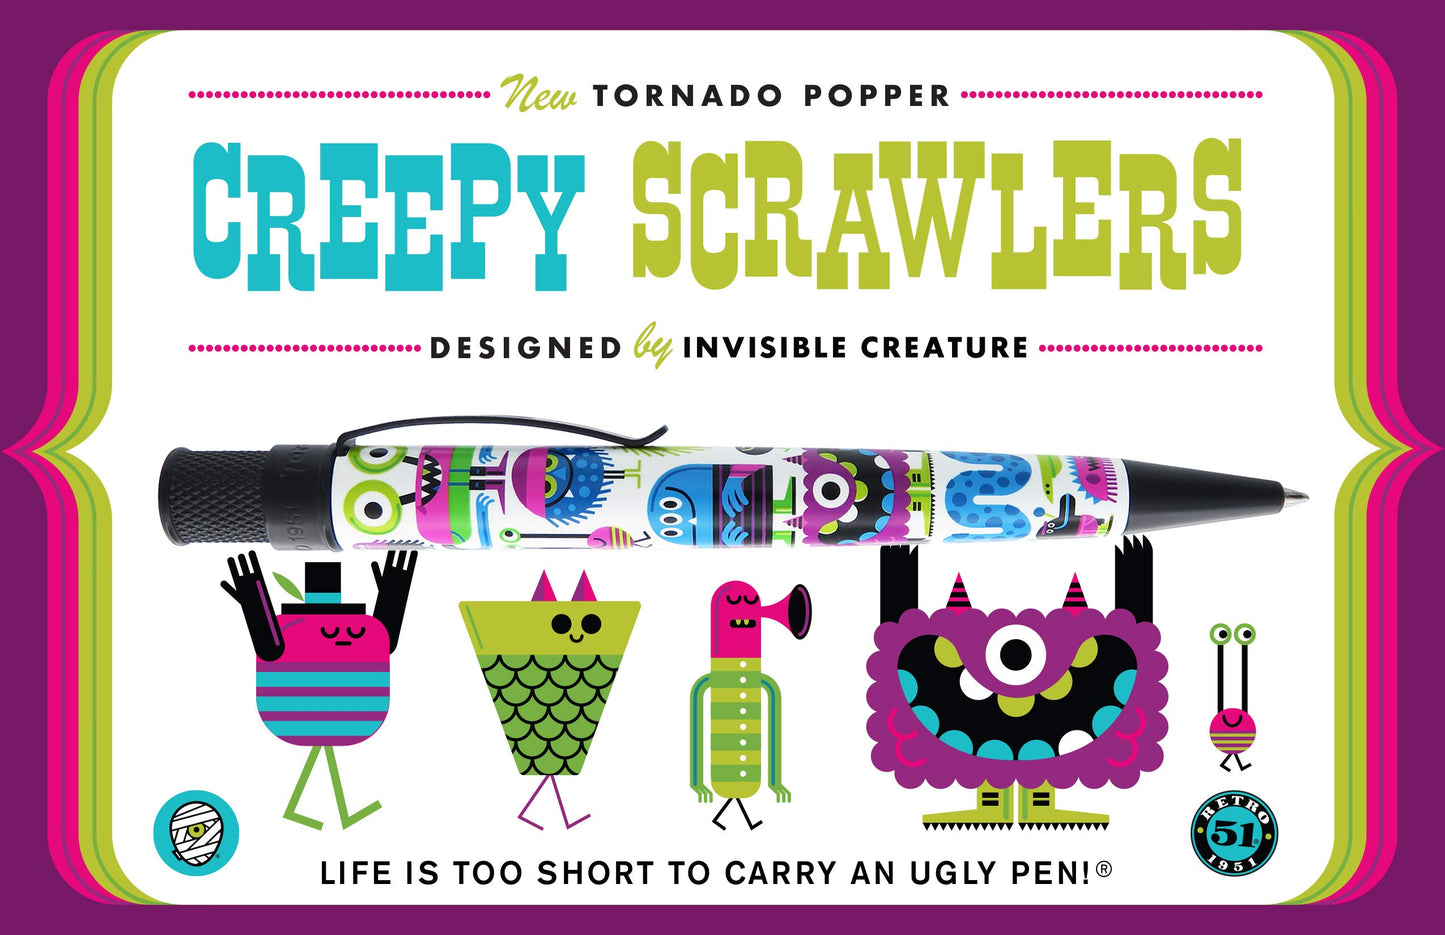 Retro 51 Creepy Scrawler Rollerball Pen